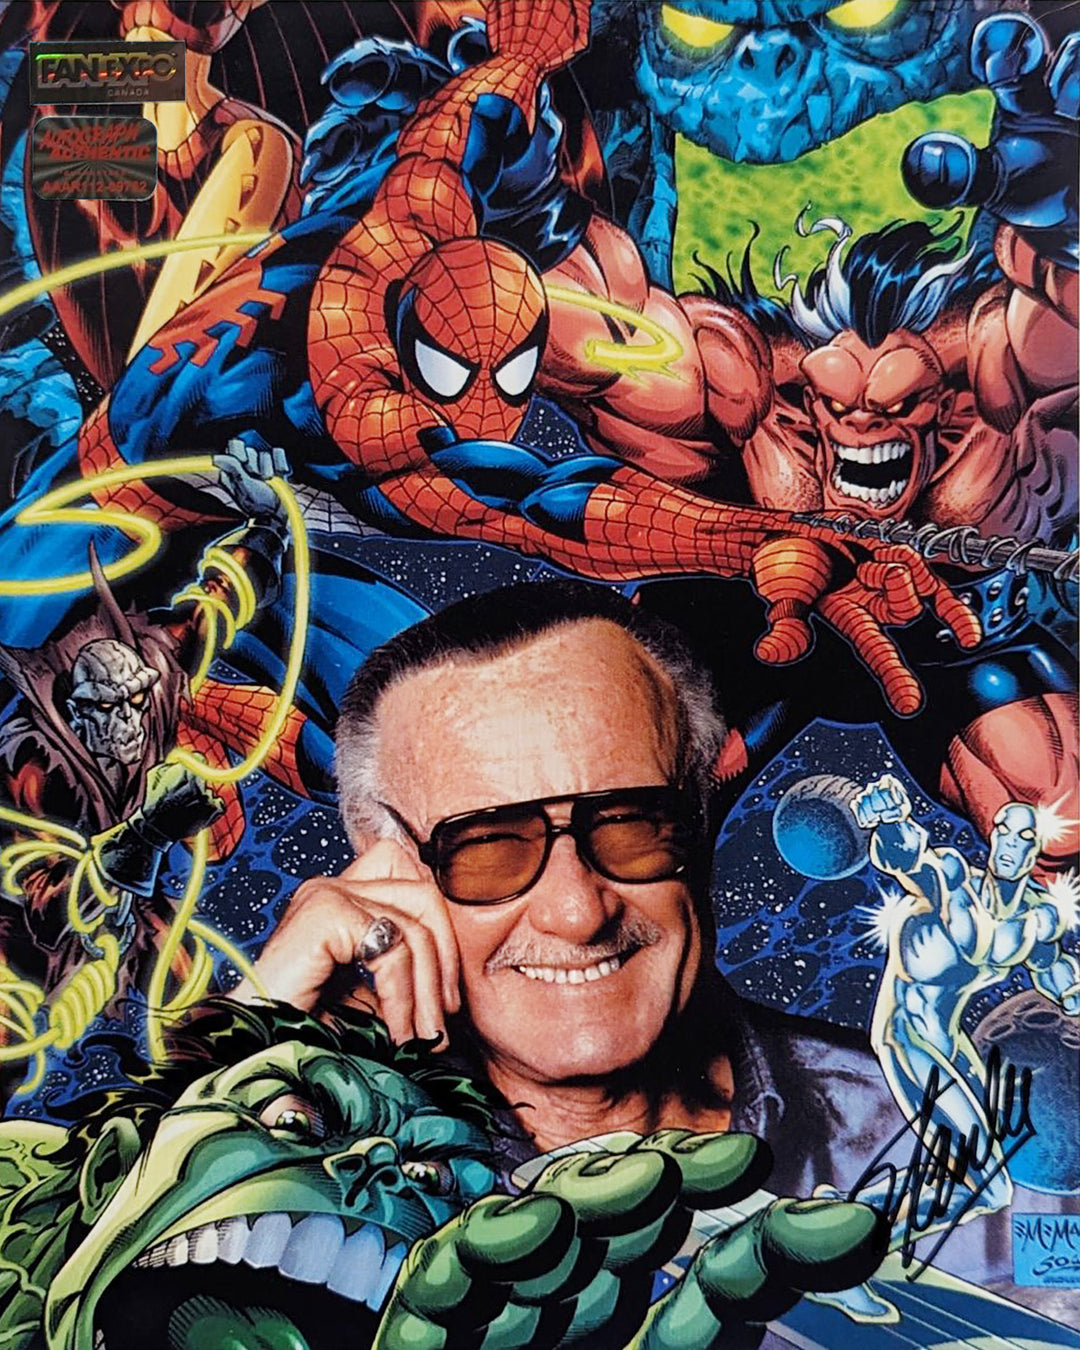 Stan Lee Signed 8X10: Marvel Comic Collage, Marvel, Pop Culture Art, Comics, Autographed, Signed, AAOCC33138